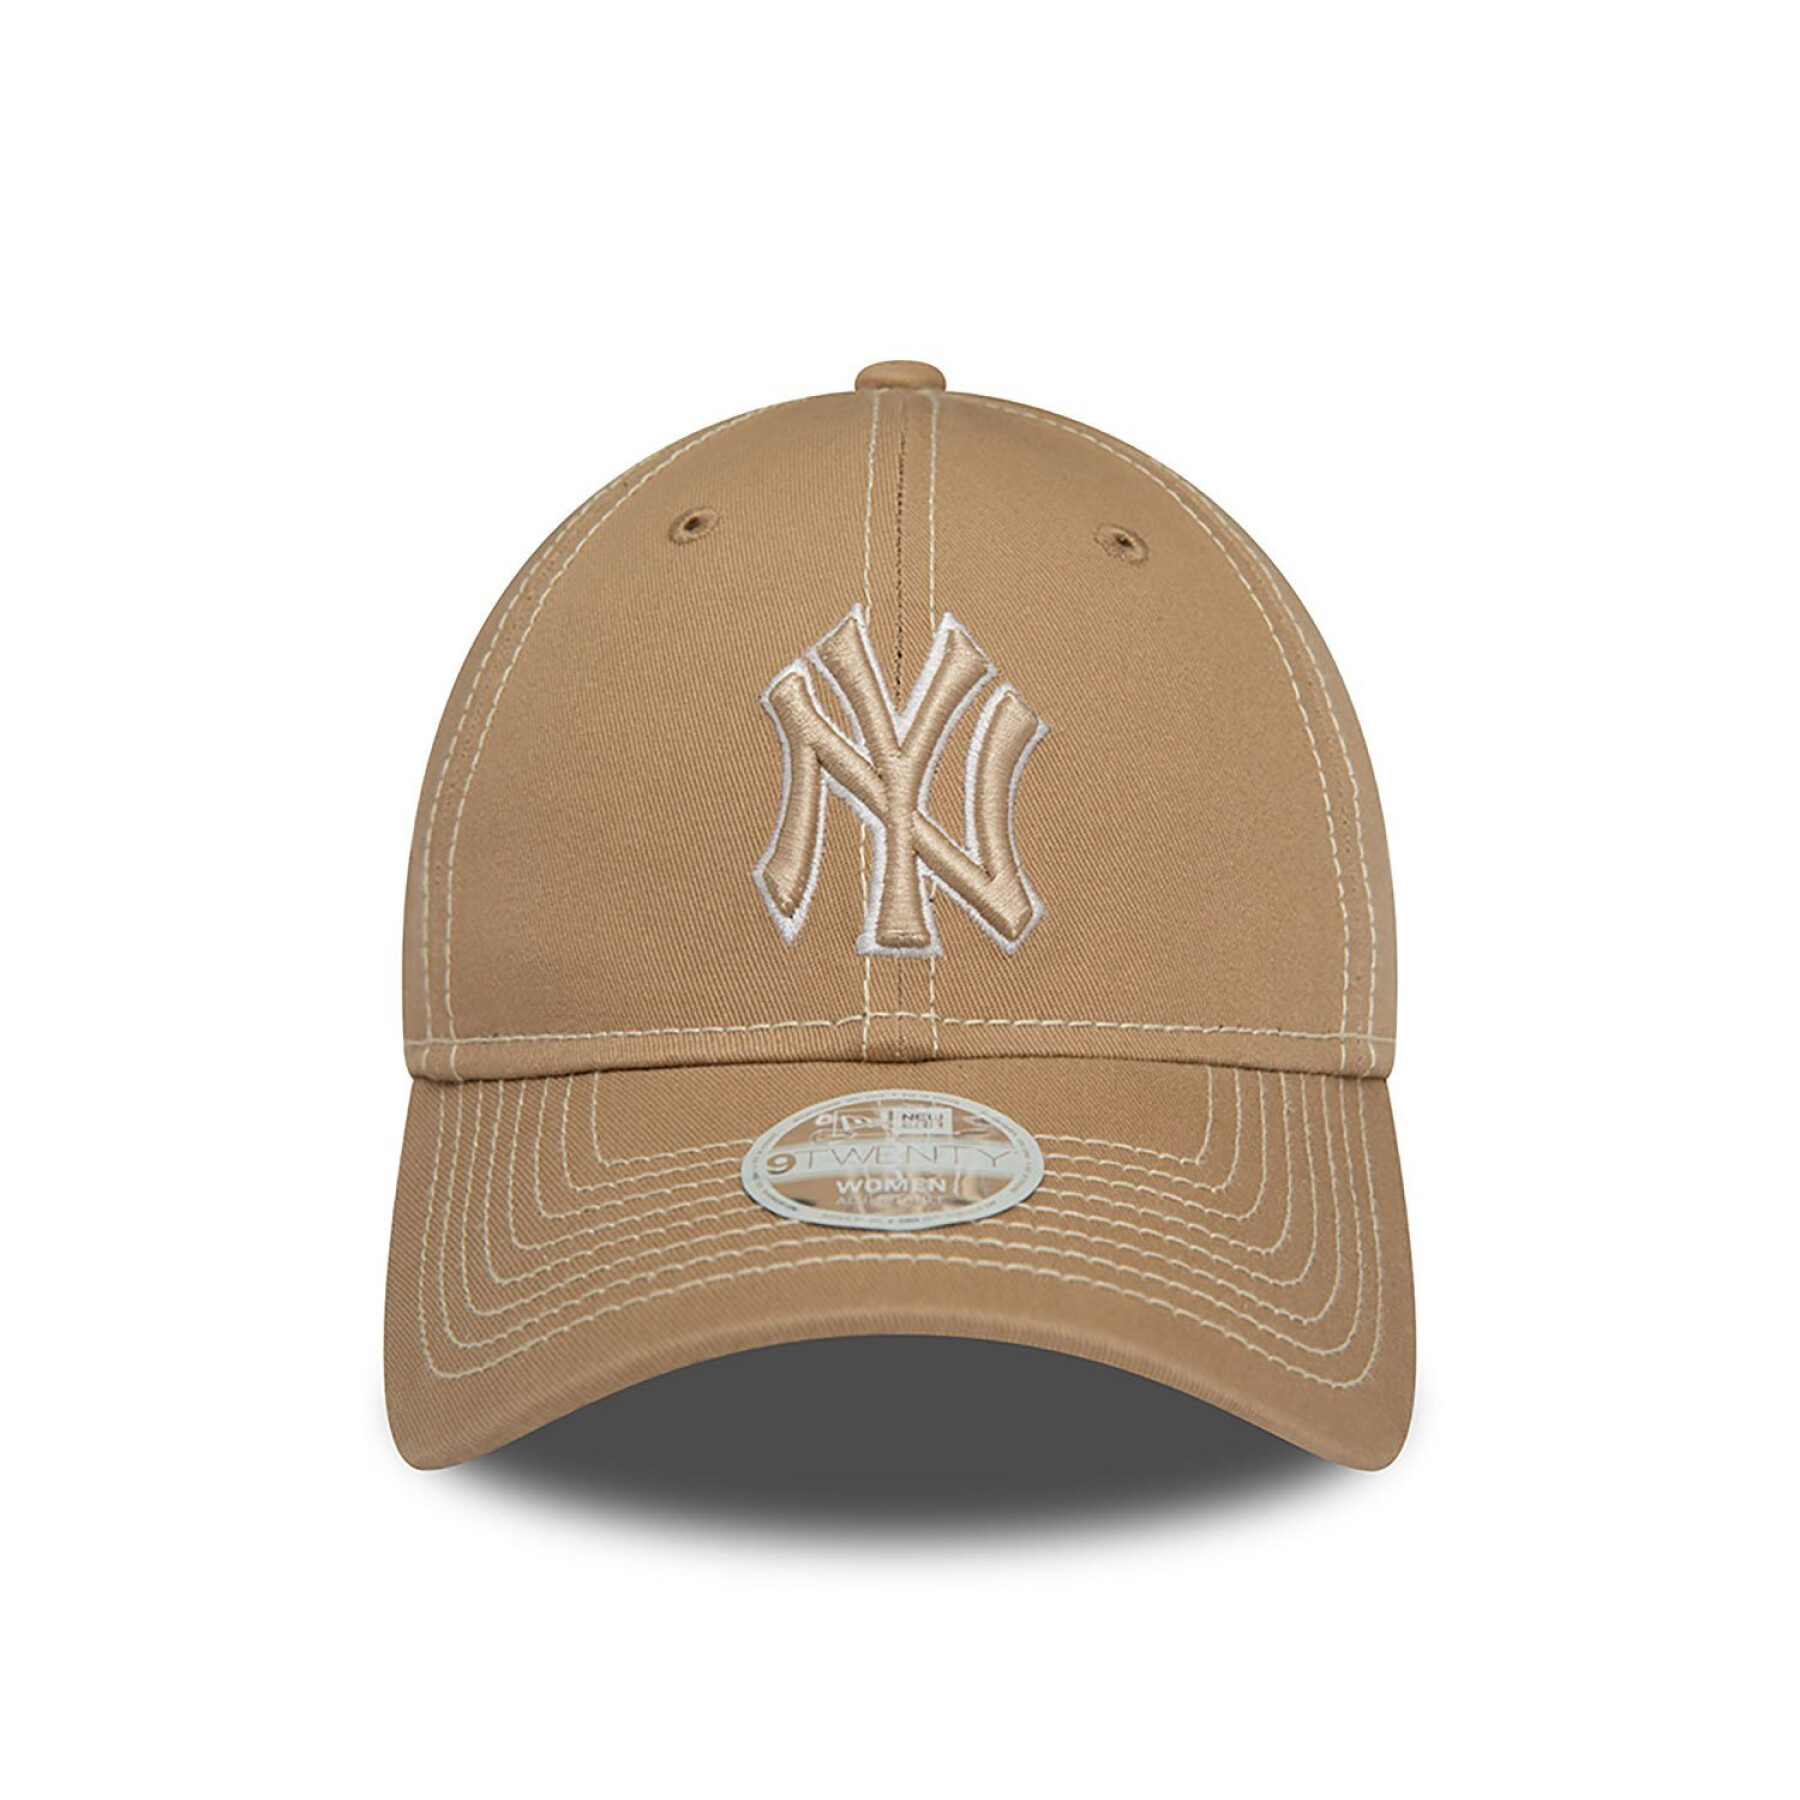 Baseball cap New York Yankees 9twenty